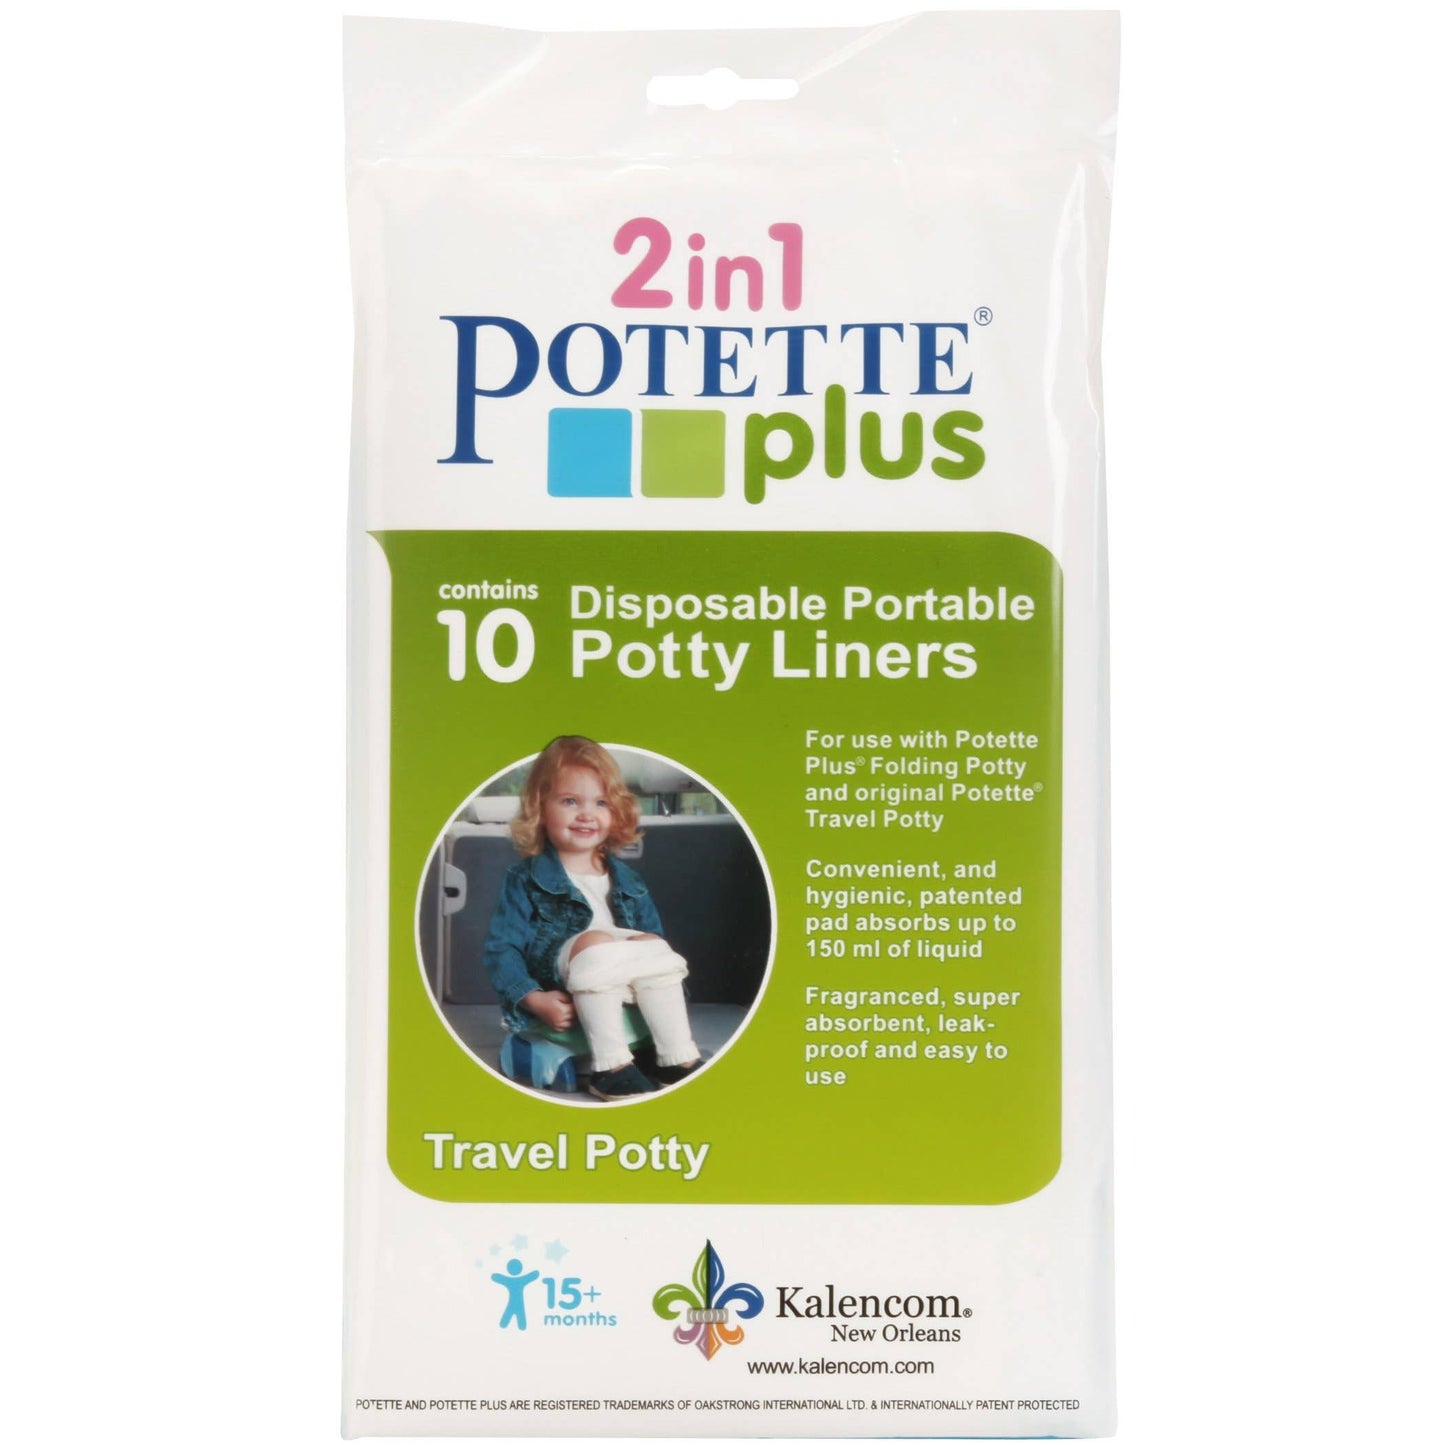 Potette - 10 Potty Liners